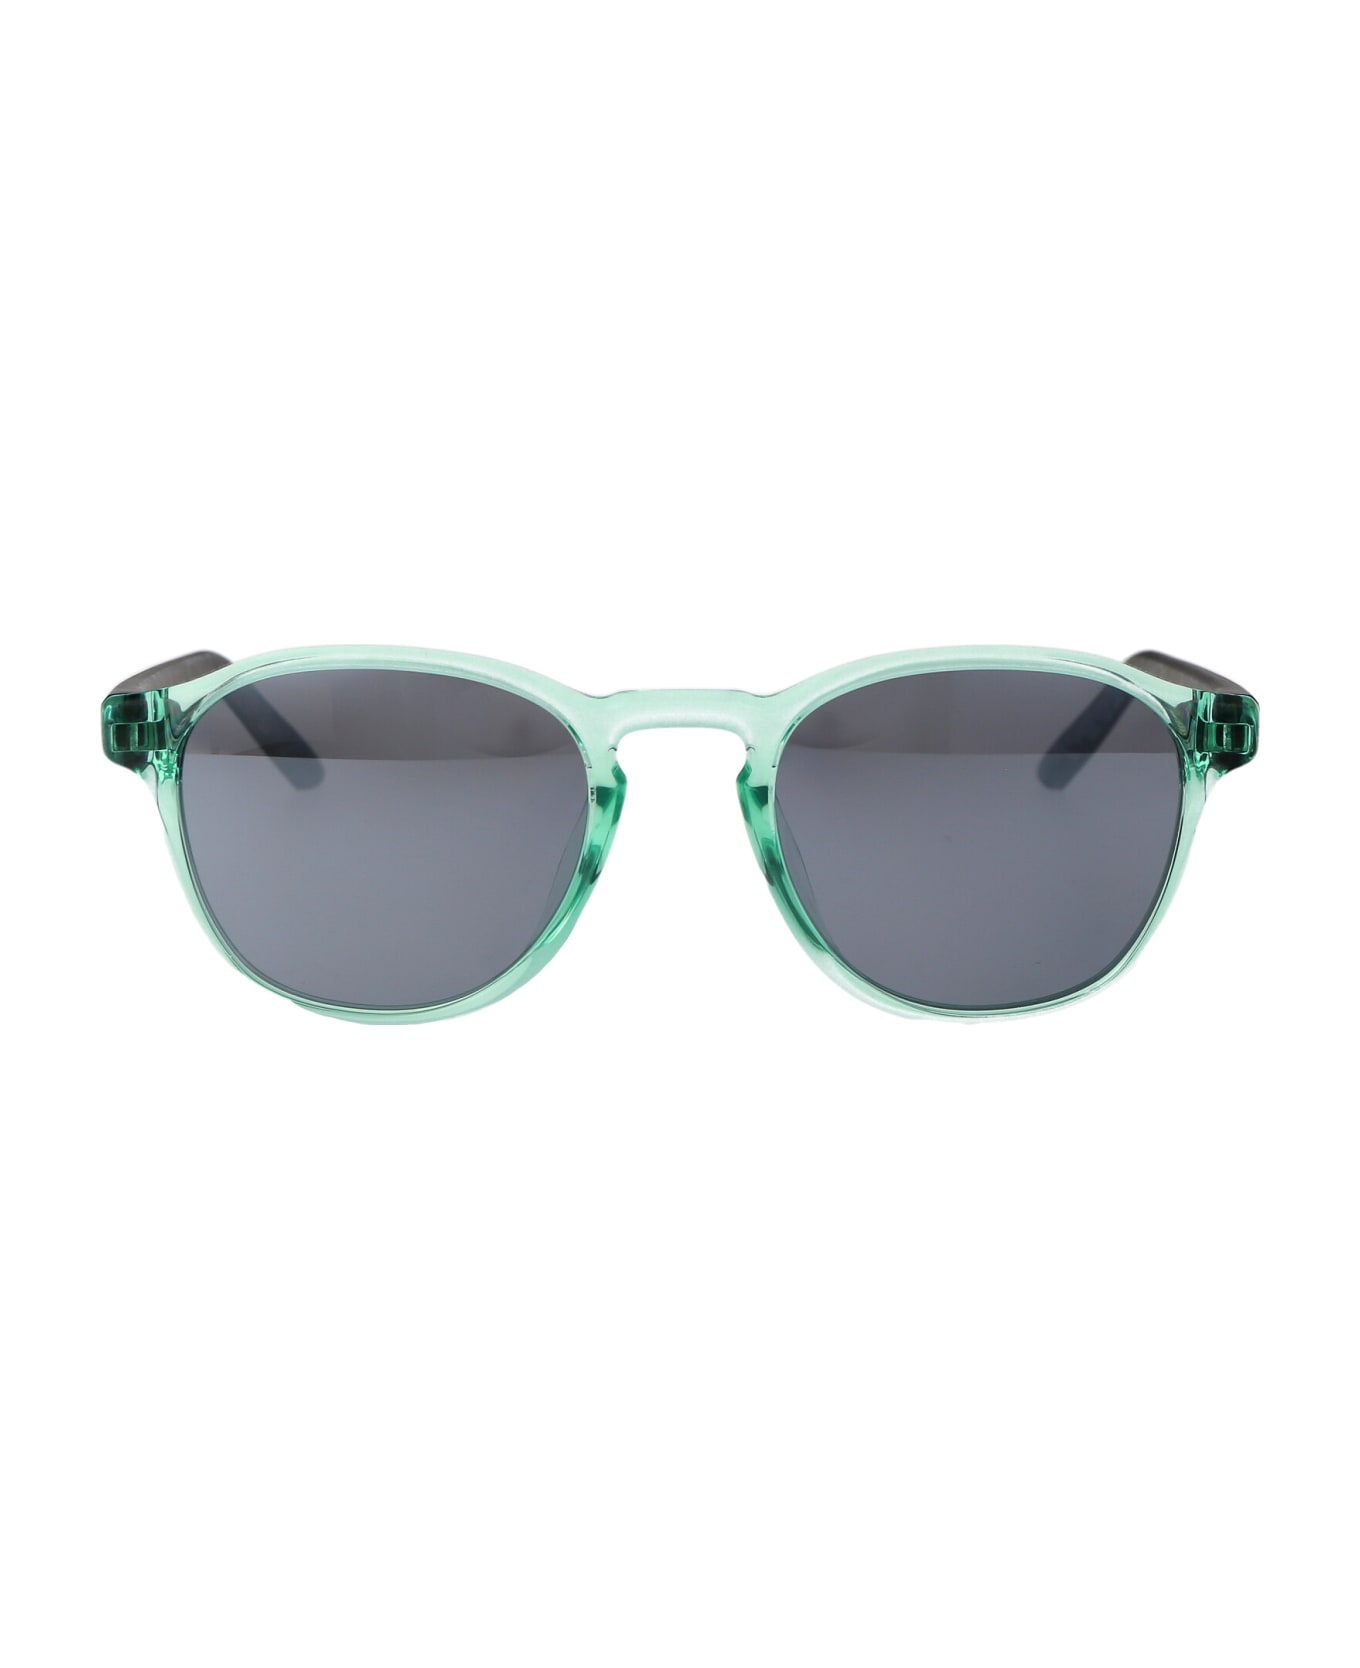 Nike Smash Sunglasses - 342 GREY W/ SILVER FLASH GREEN GLOW サングラス